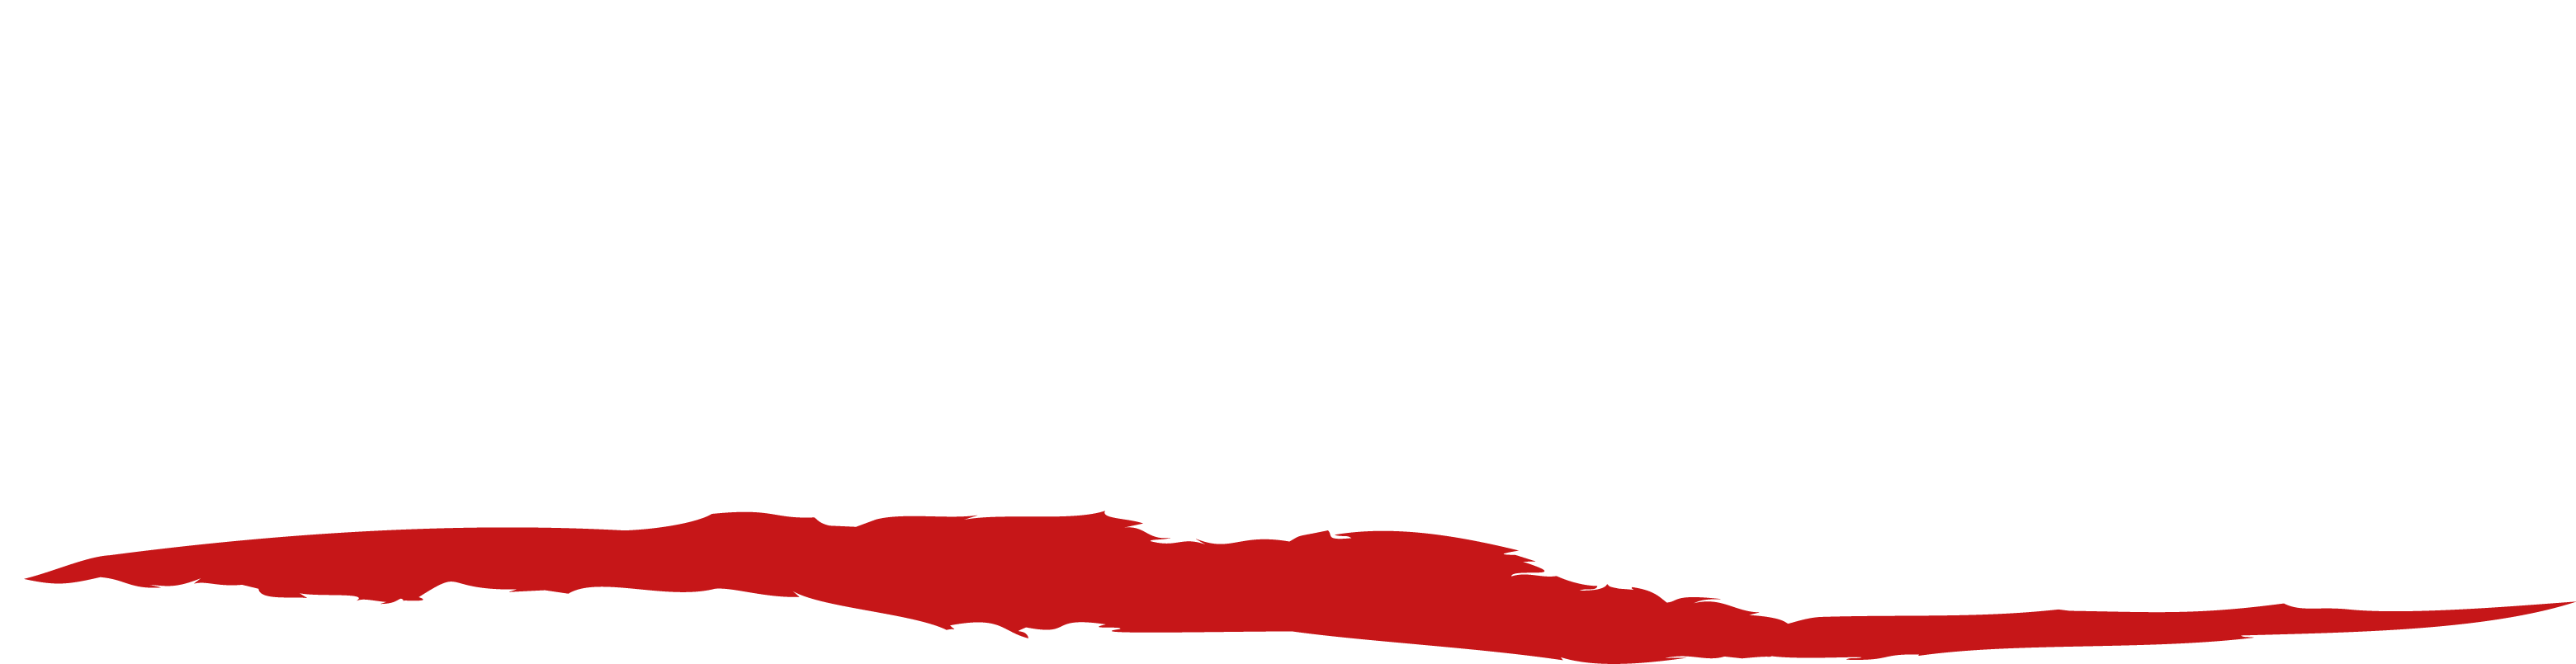 Logo du Puy du Fou